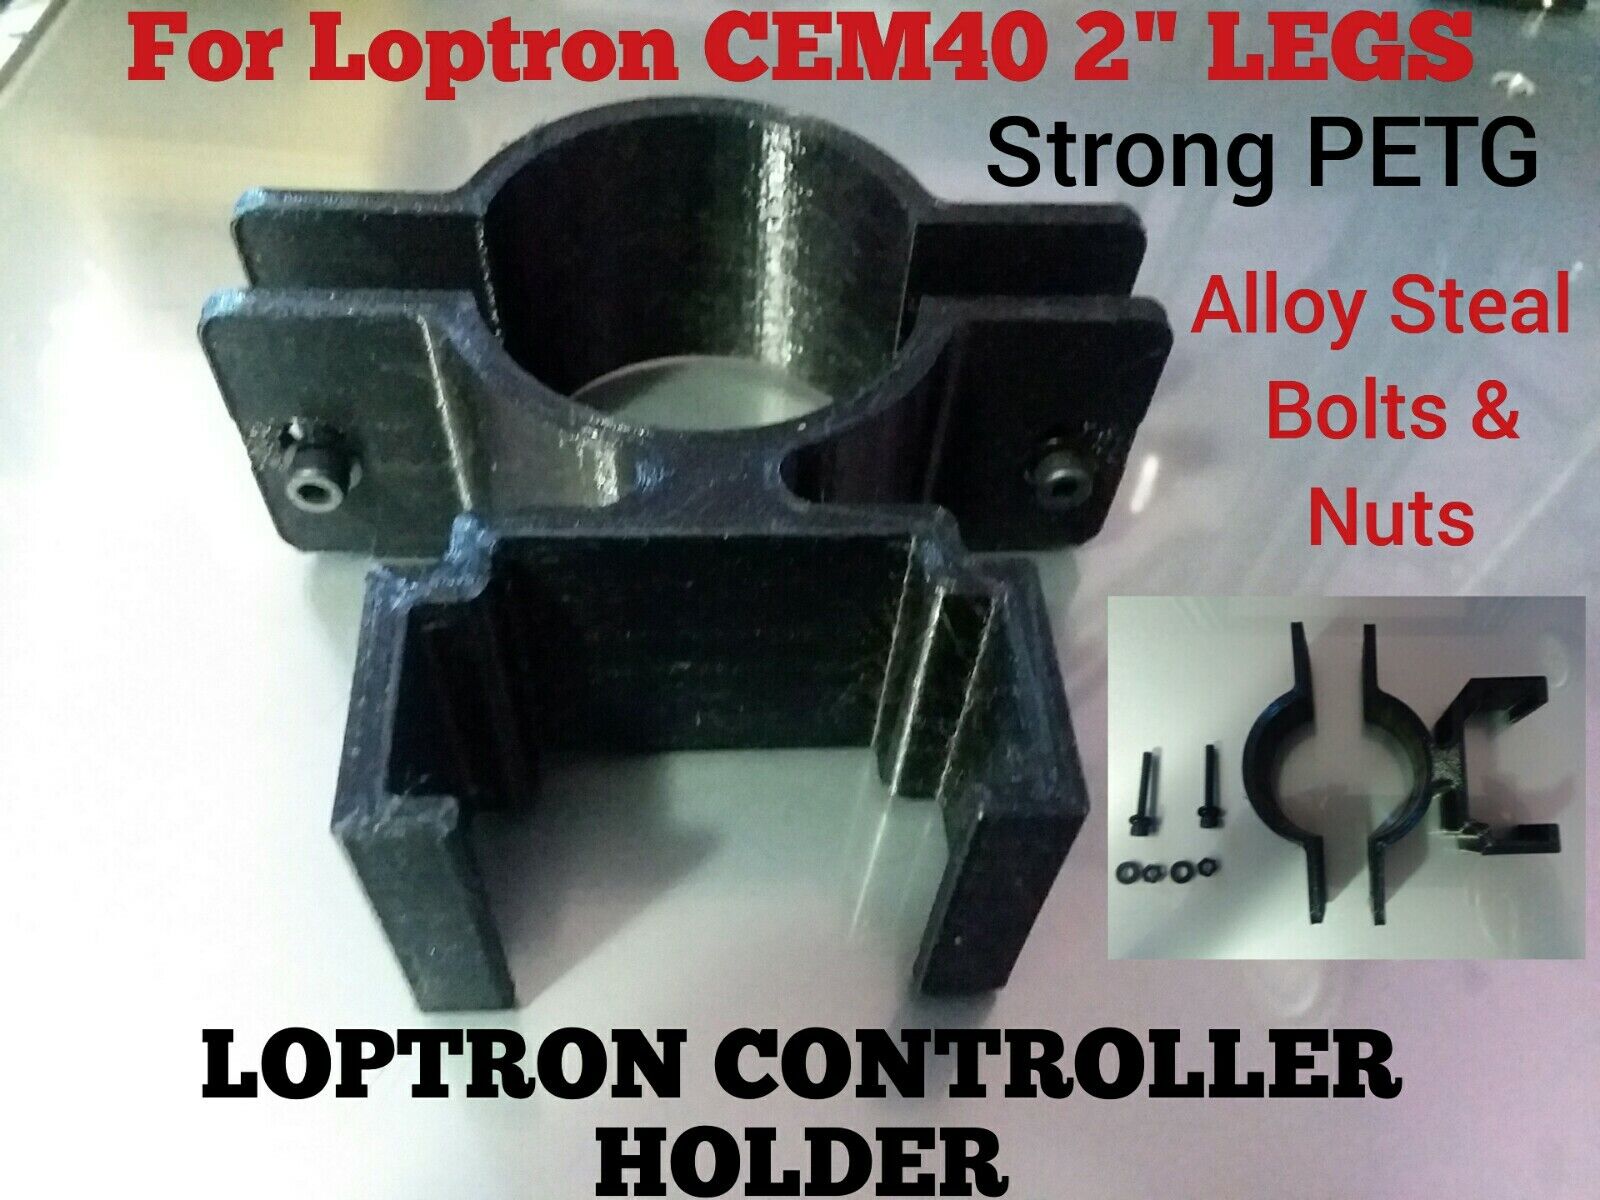 2" Tripod Leg Hand-control Holder For Ioptron Cem40. Tripod Leg Mount. Petg